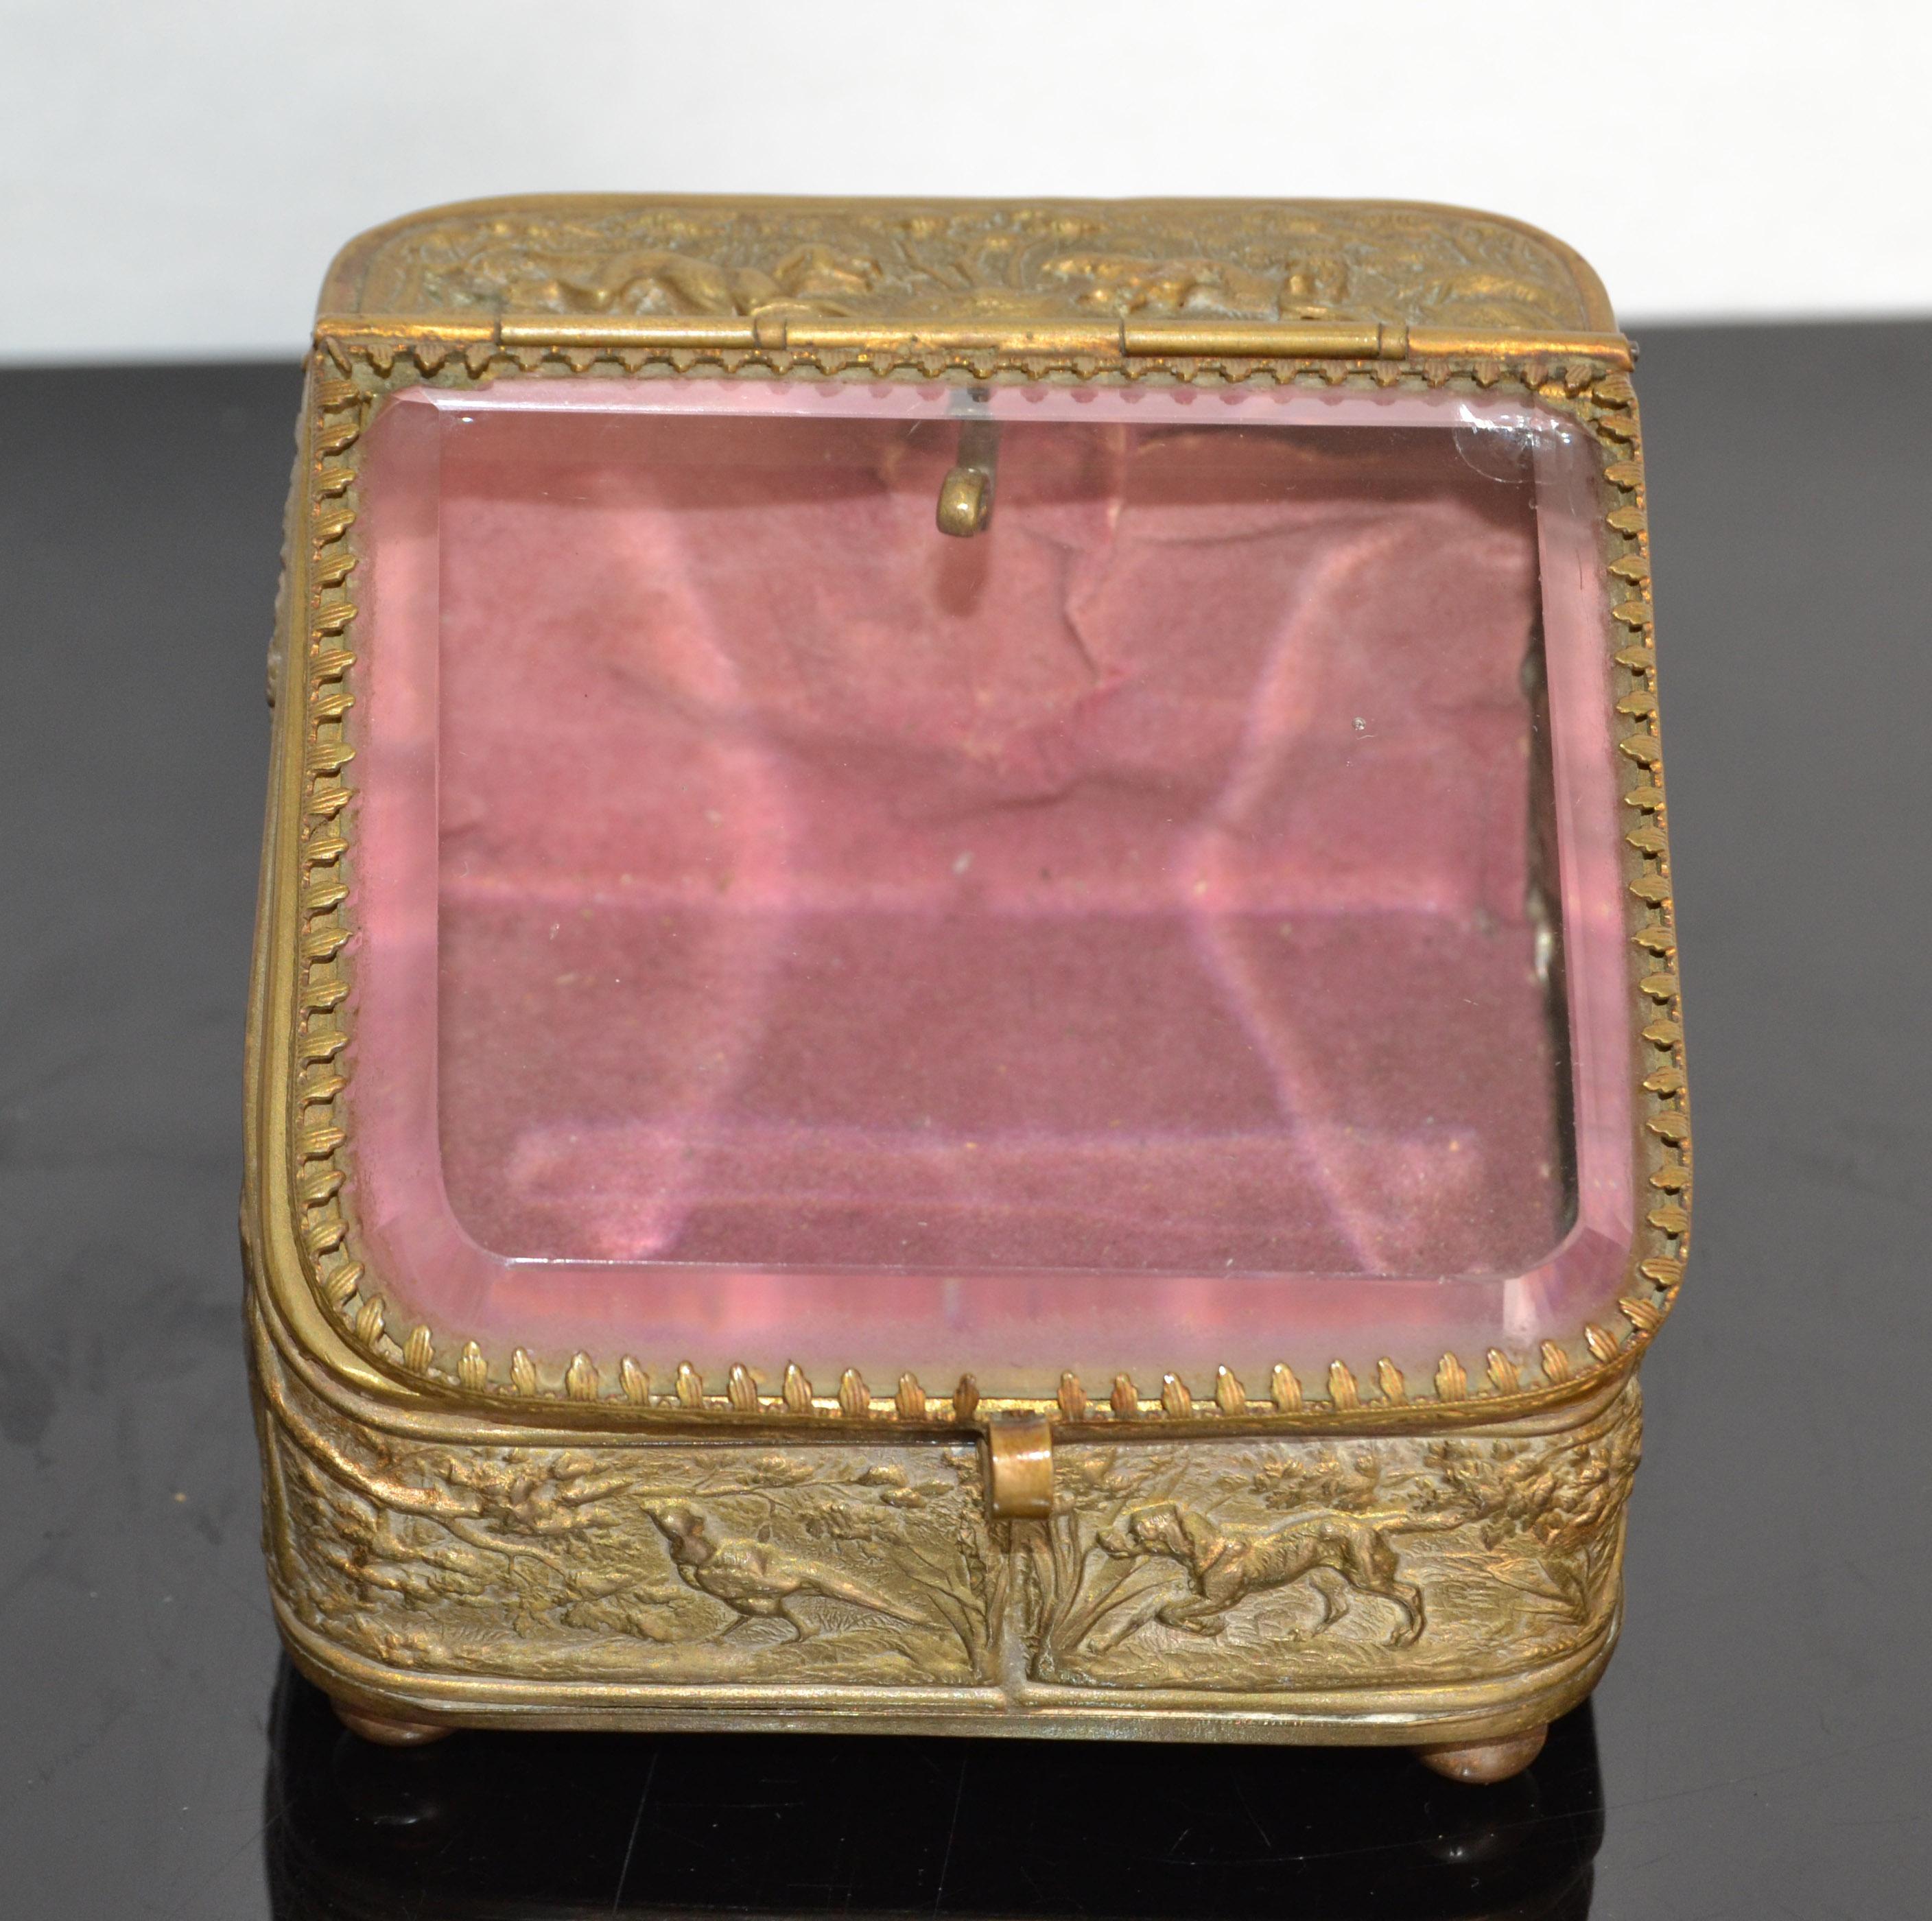 20th Century Antique French Napoleon III Era Pocket Watch Display Casket Box Hunt Theme Boar For Sale